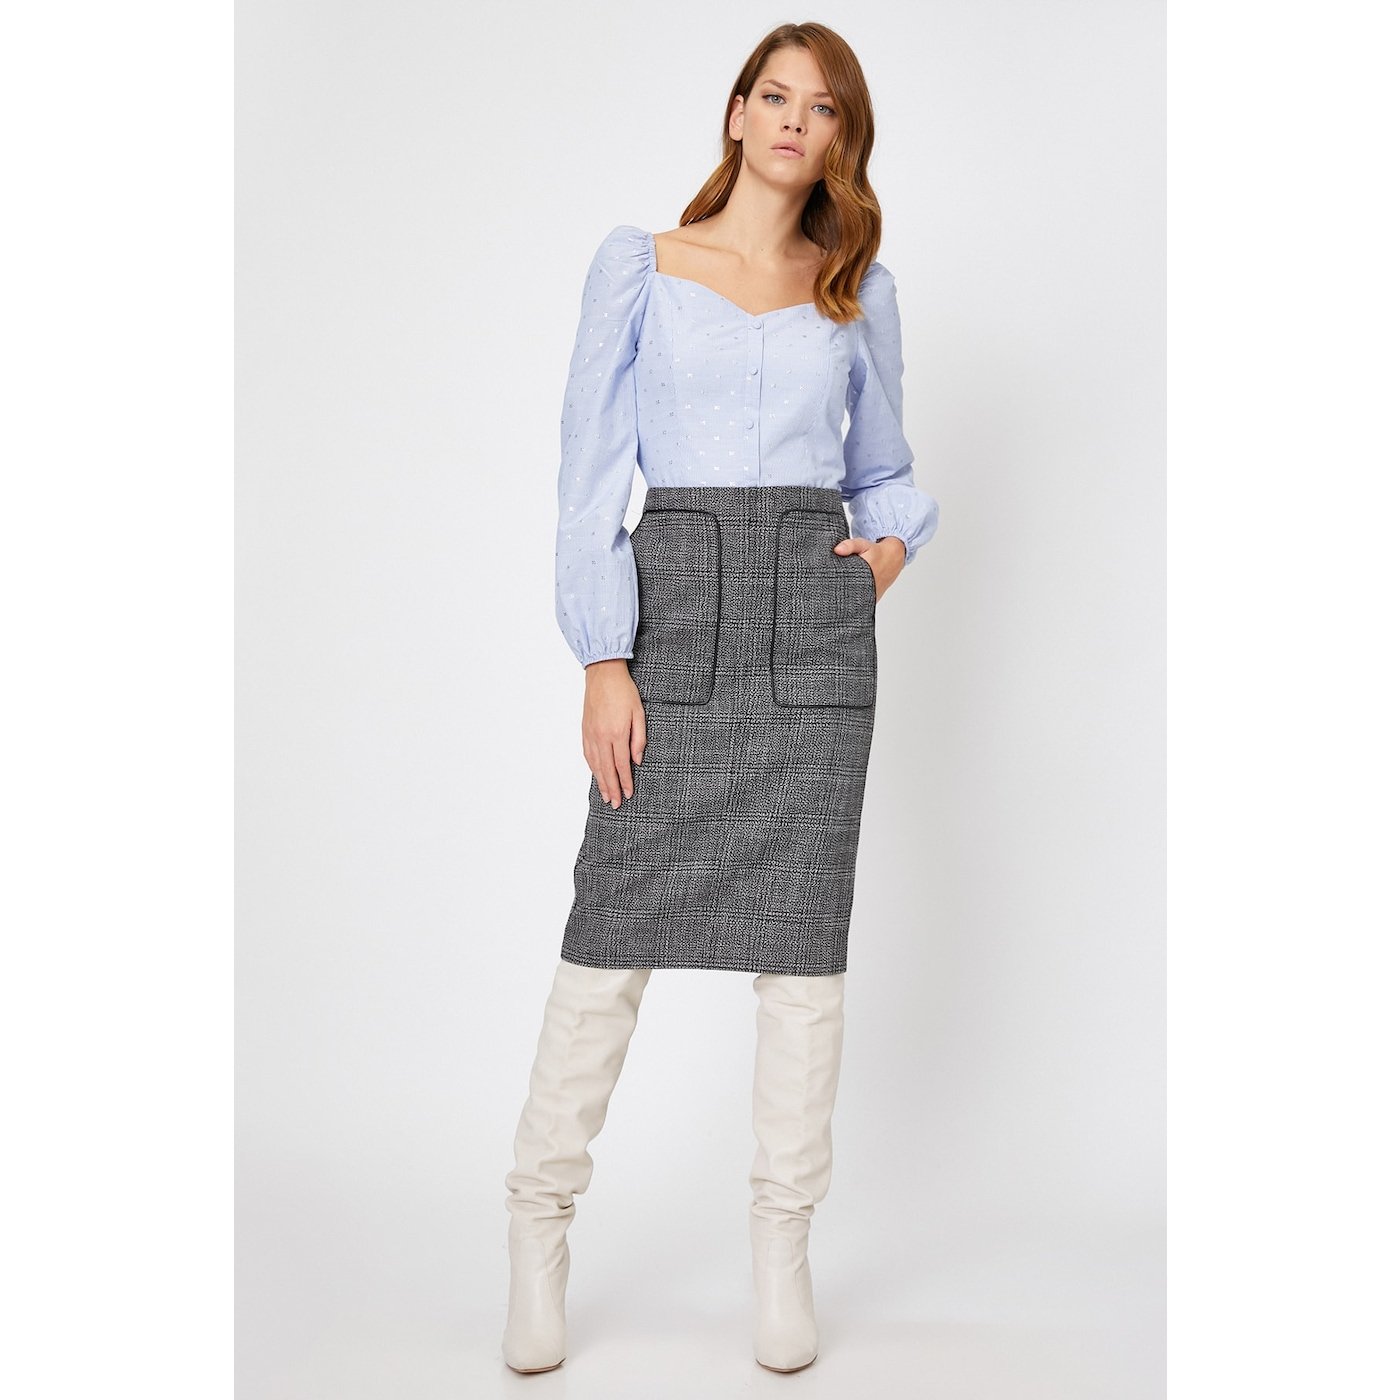 Koton Skirtly Yours Styled By Melis Agazat - Plaid Skirt